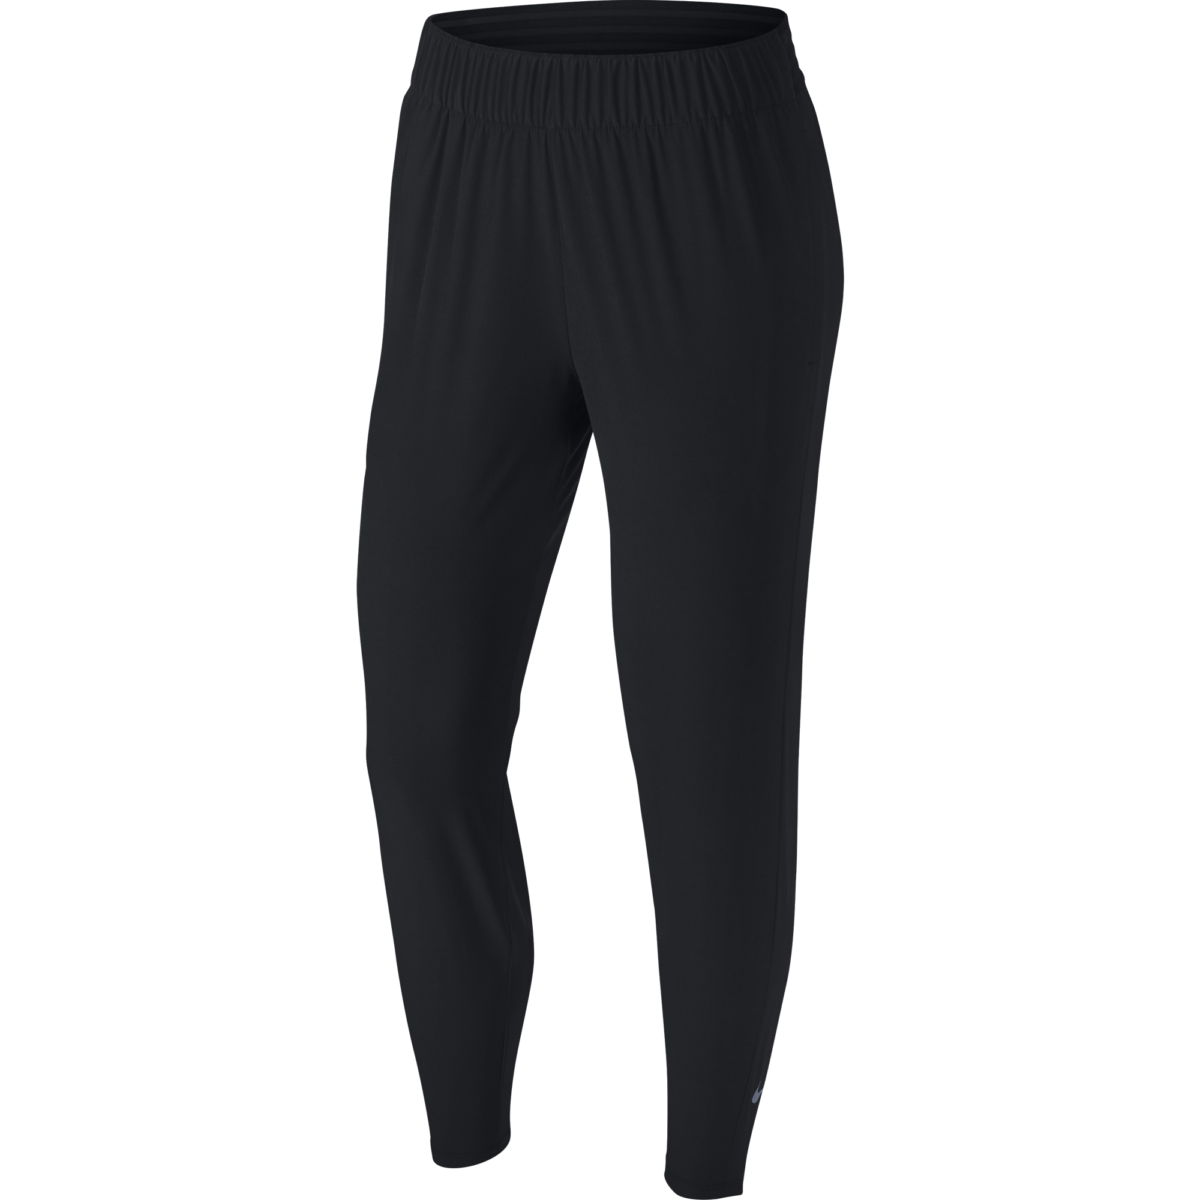 Женские спортивные штаны Nike Essential 7-8 Core BV2898-011 по цене 5400.0